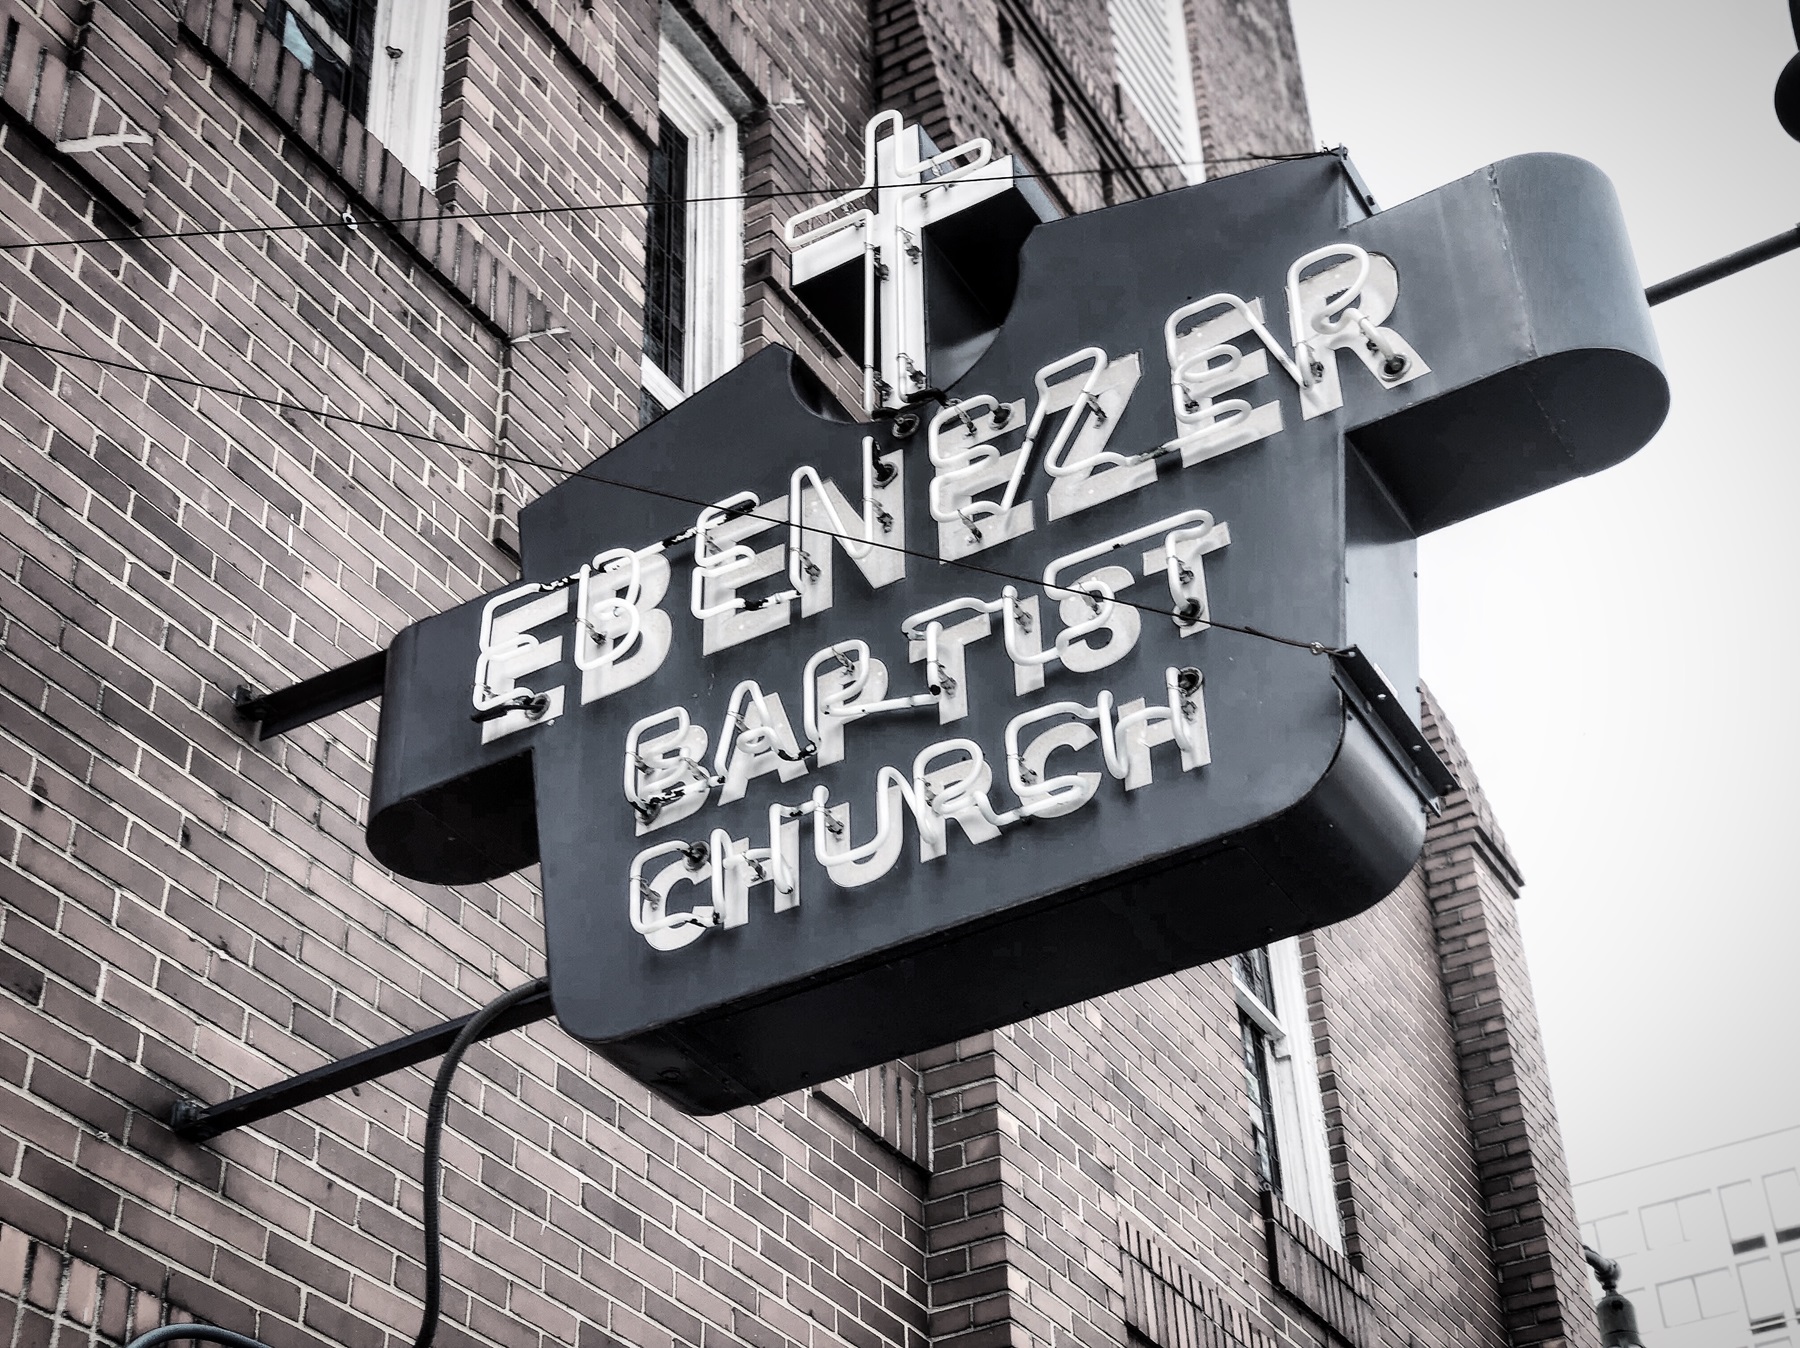 Ebenezer Baptist Church, Atlanta